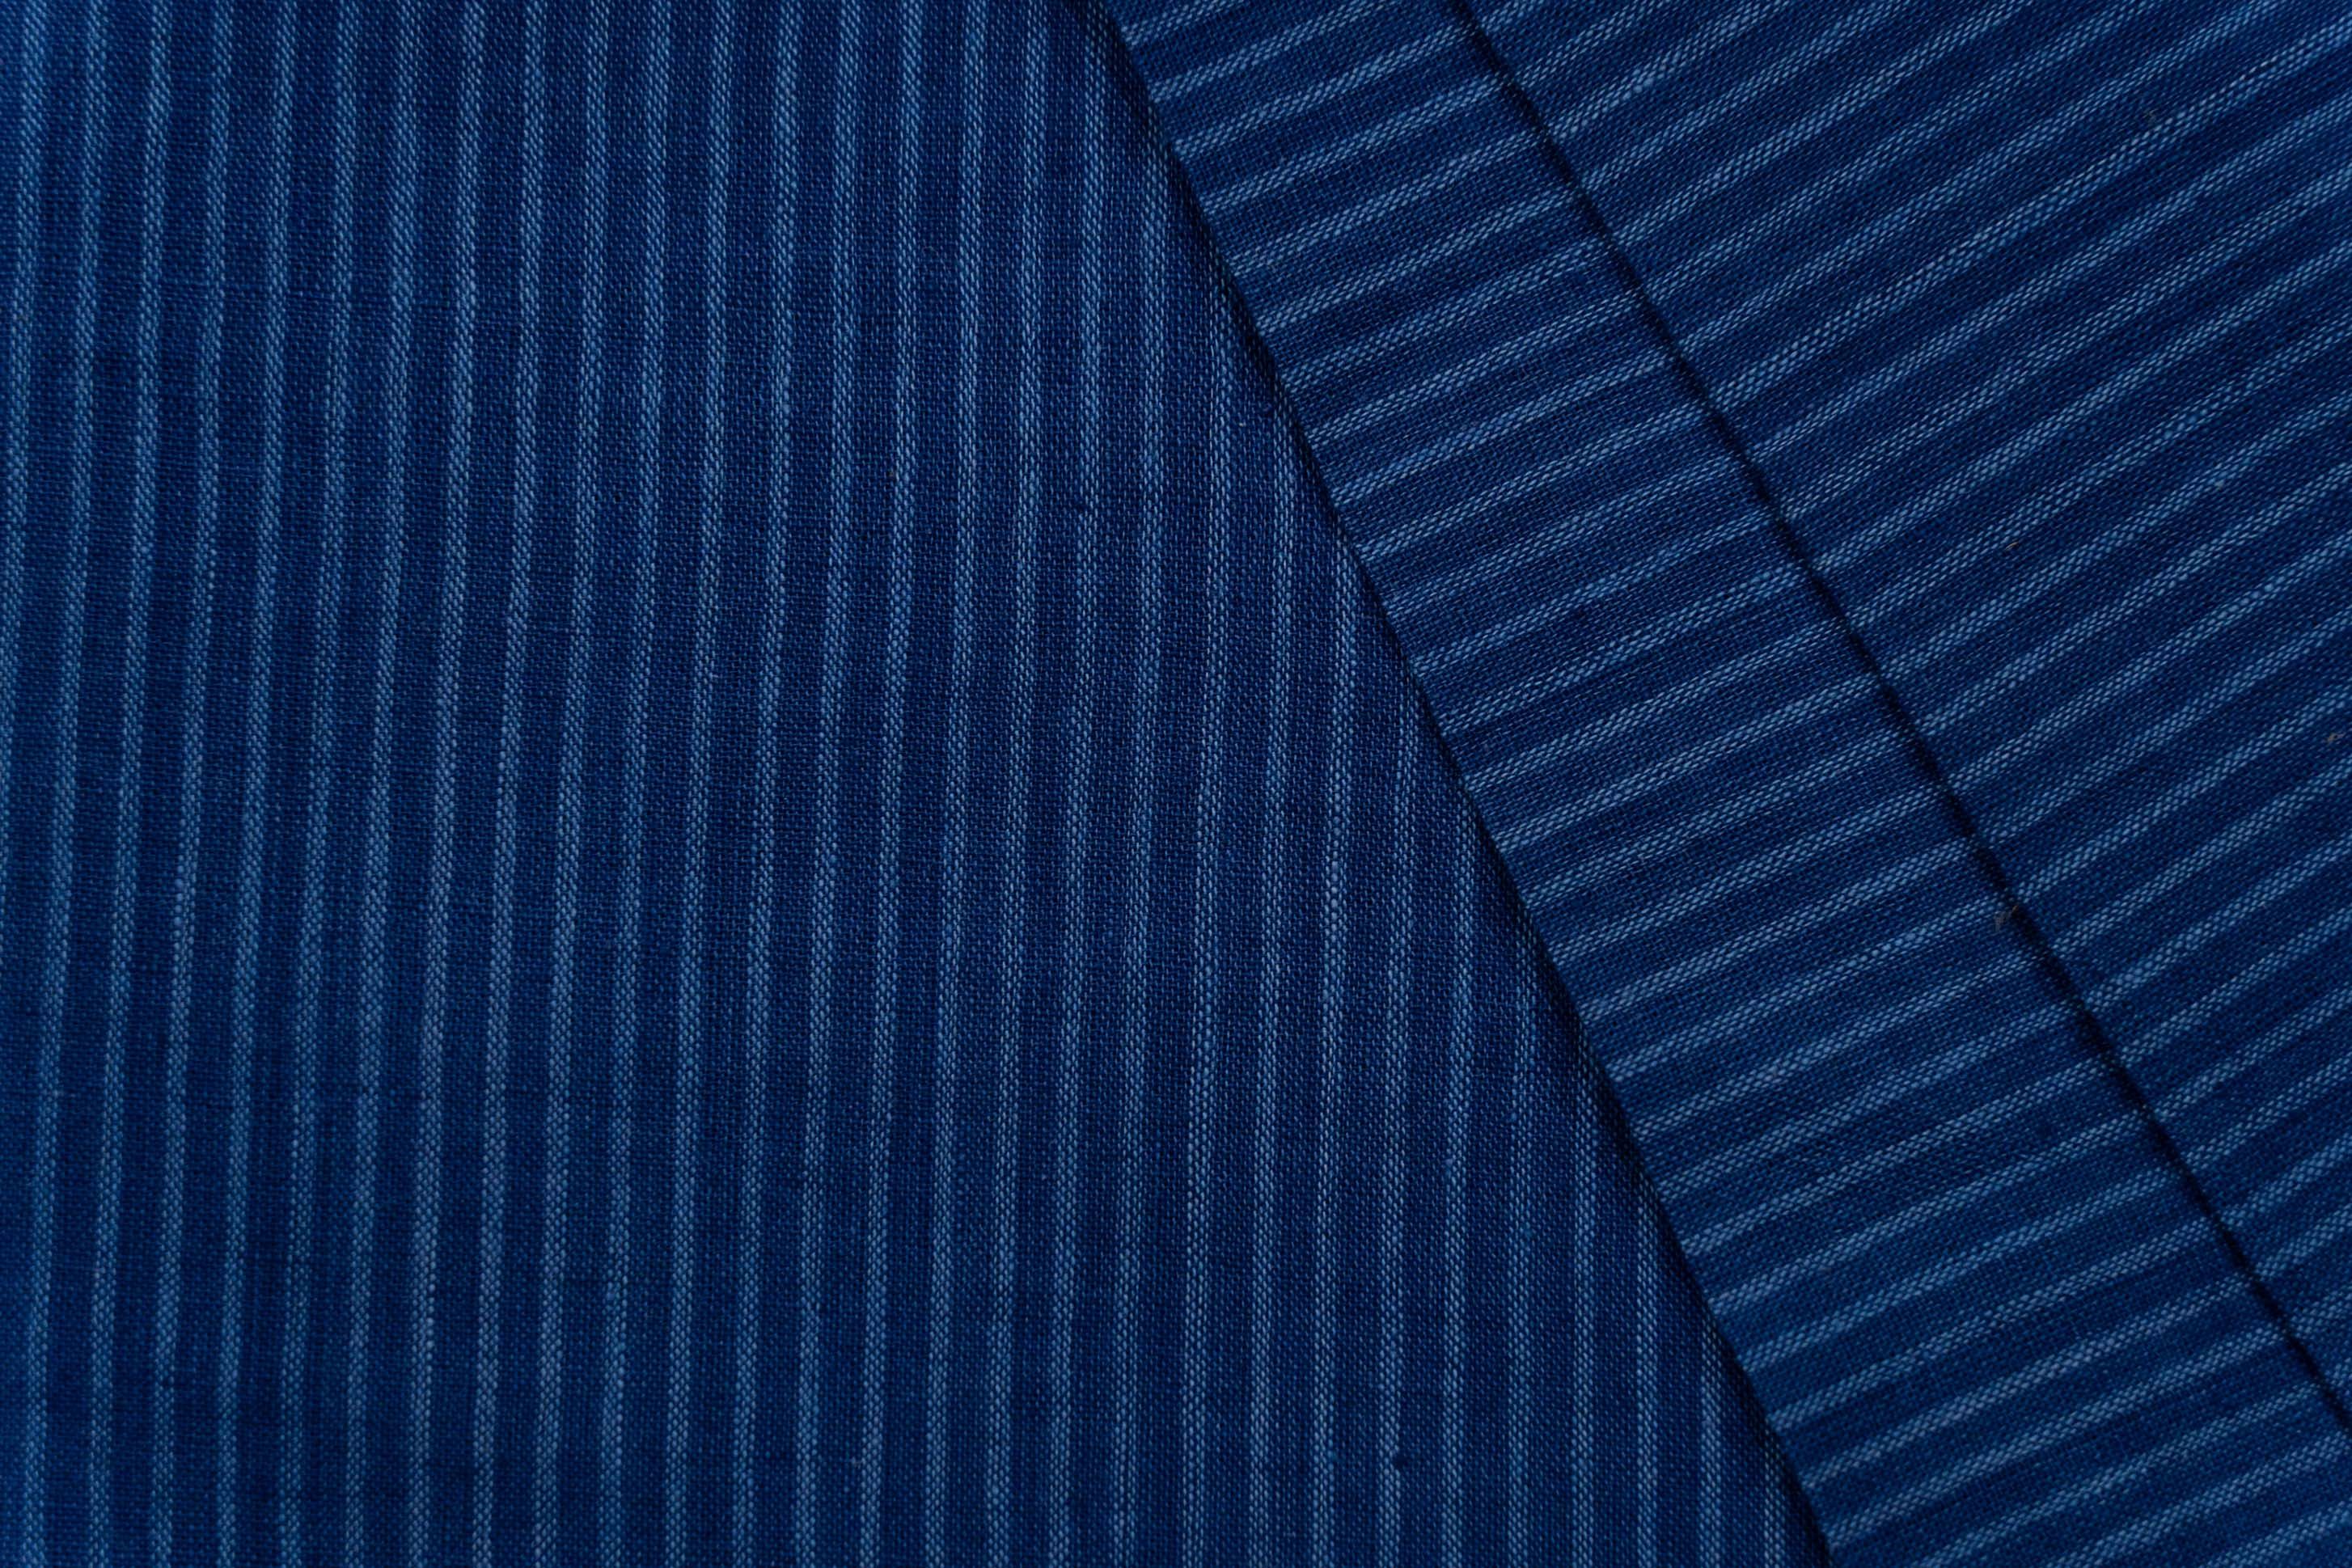 Royal Blue Striped Khari Cotton Fabric